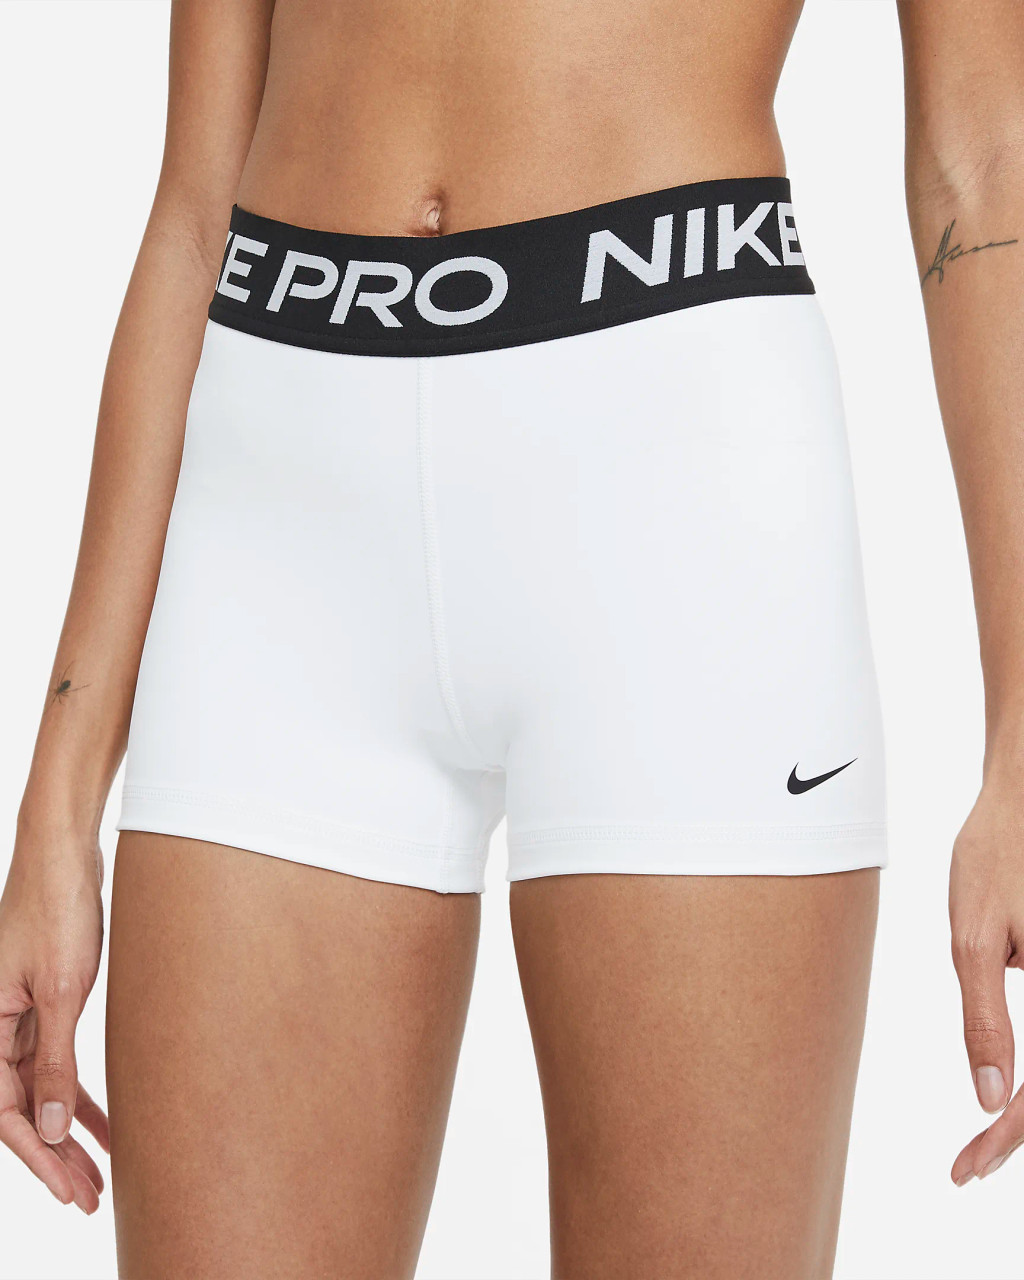 Nike Pro Training 365 3-inch shorts in khaki